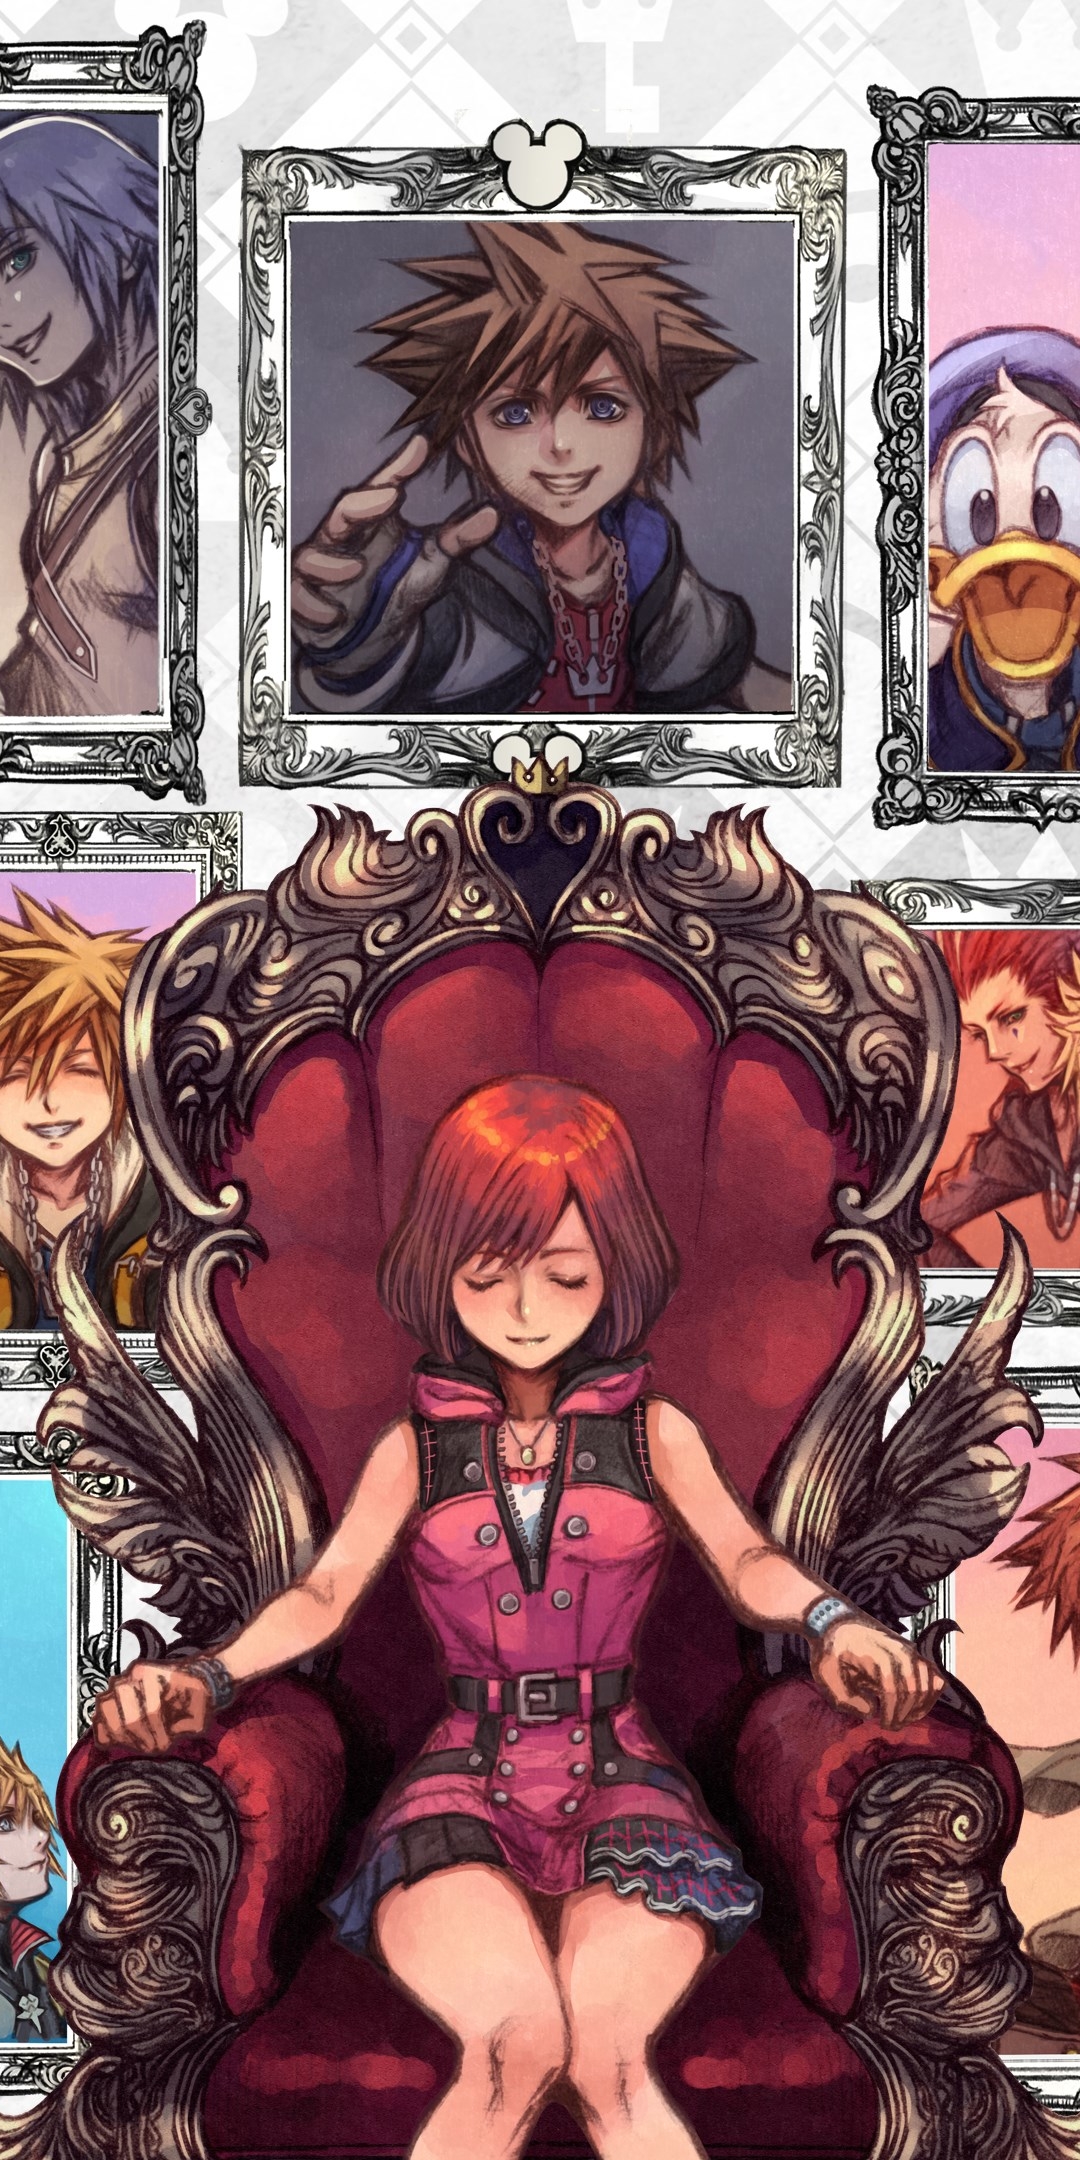 Sora Wallpaper Kingdom Hearts Mobile by ABRAIDA on DeviantArt